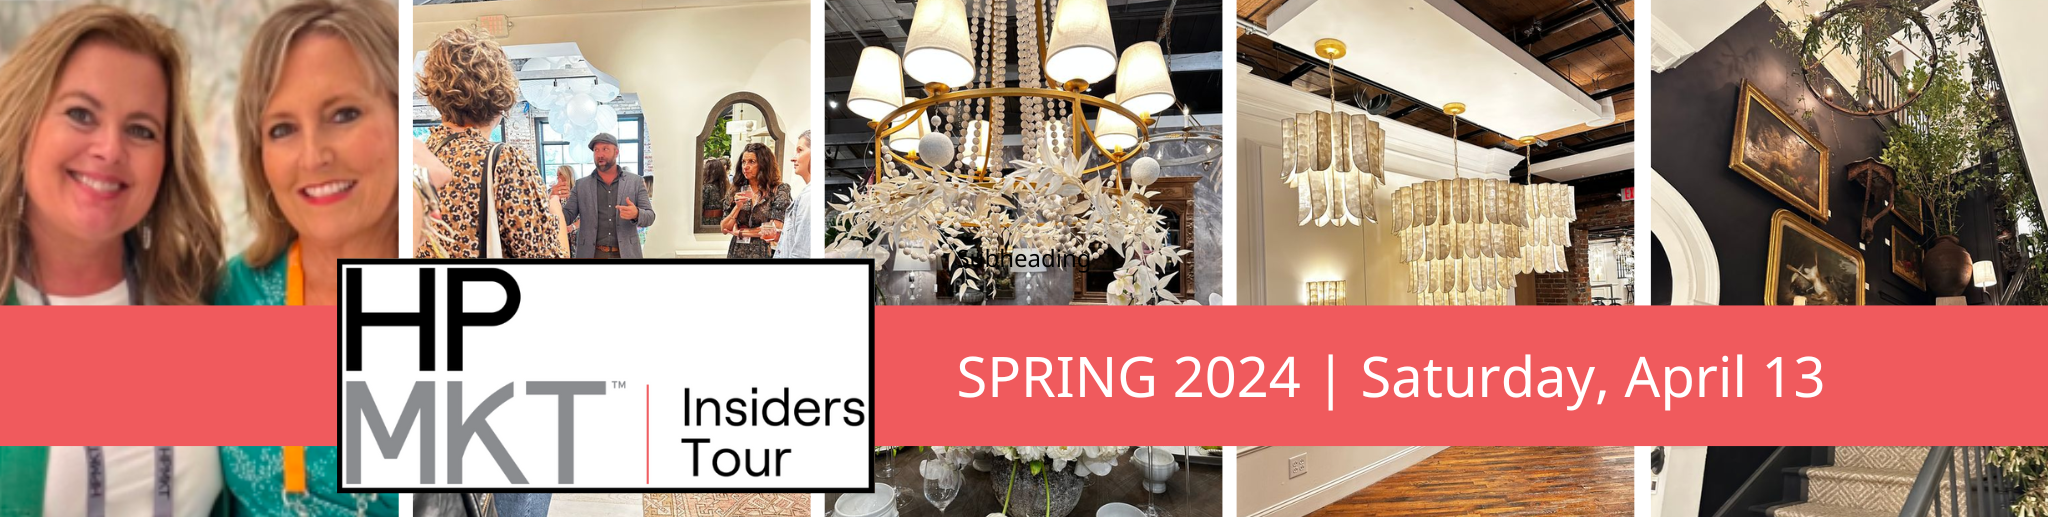 insiders-tour-banner-spring-2024